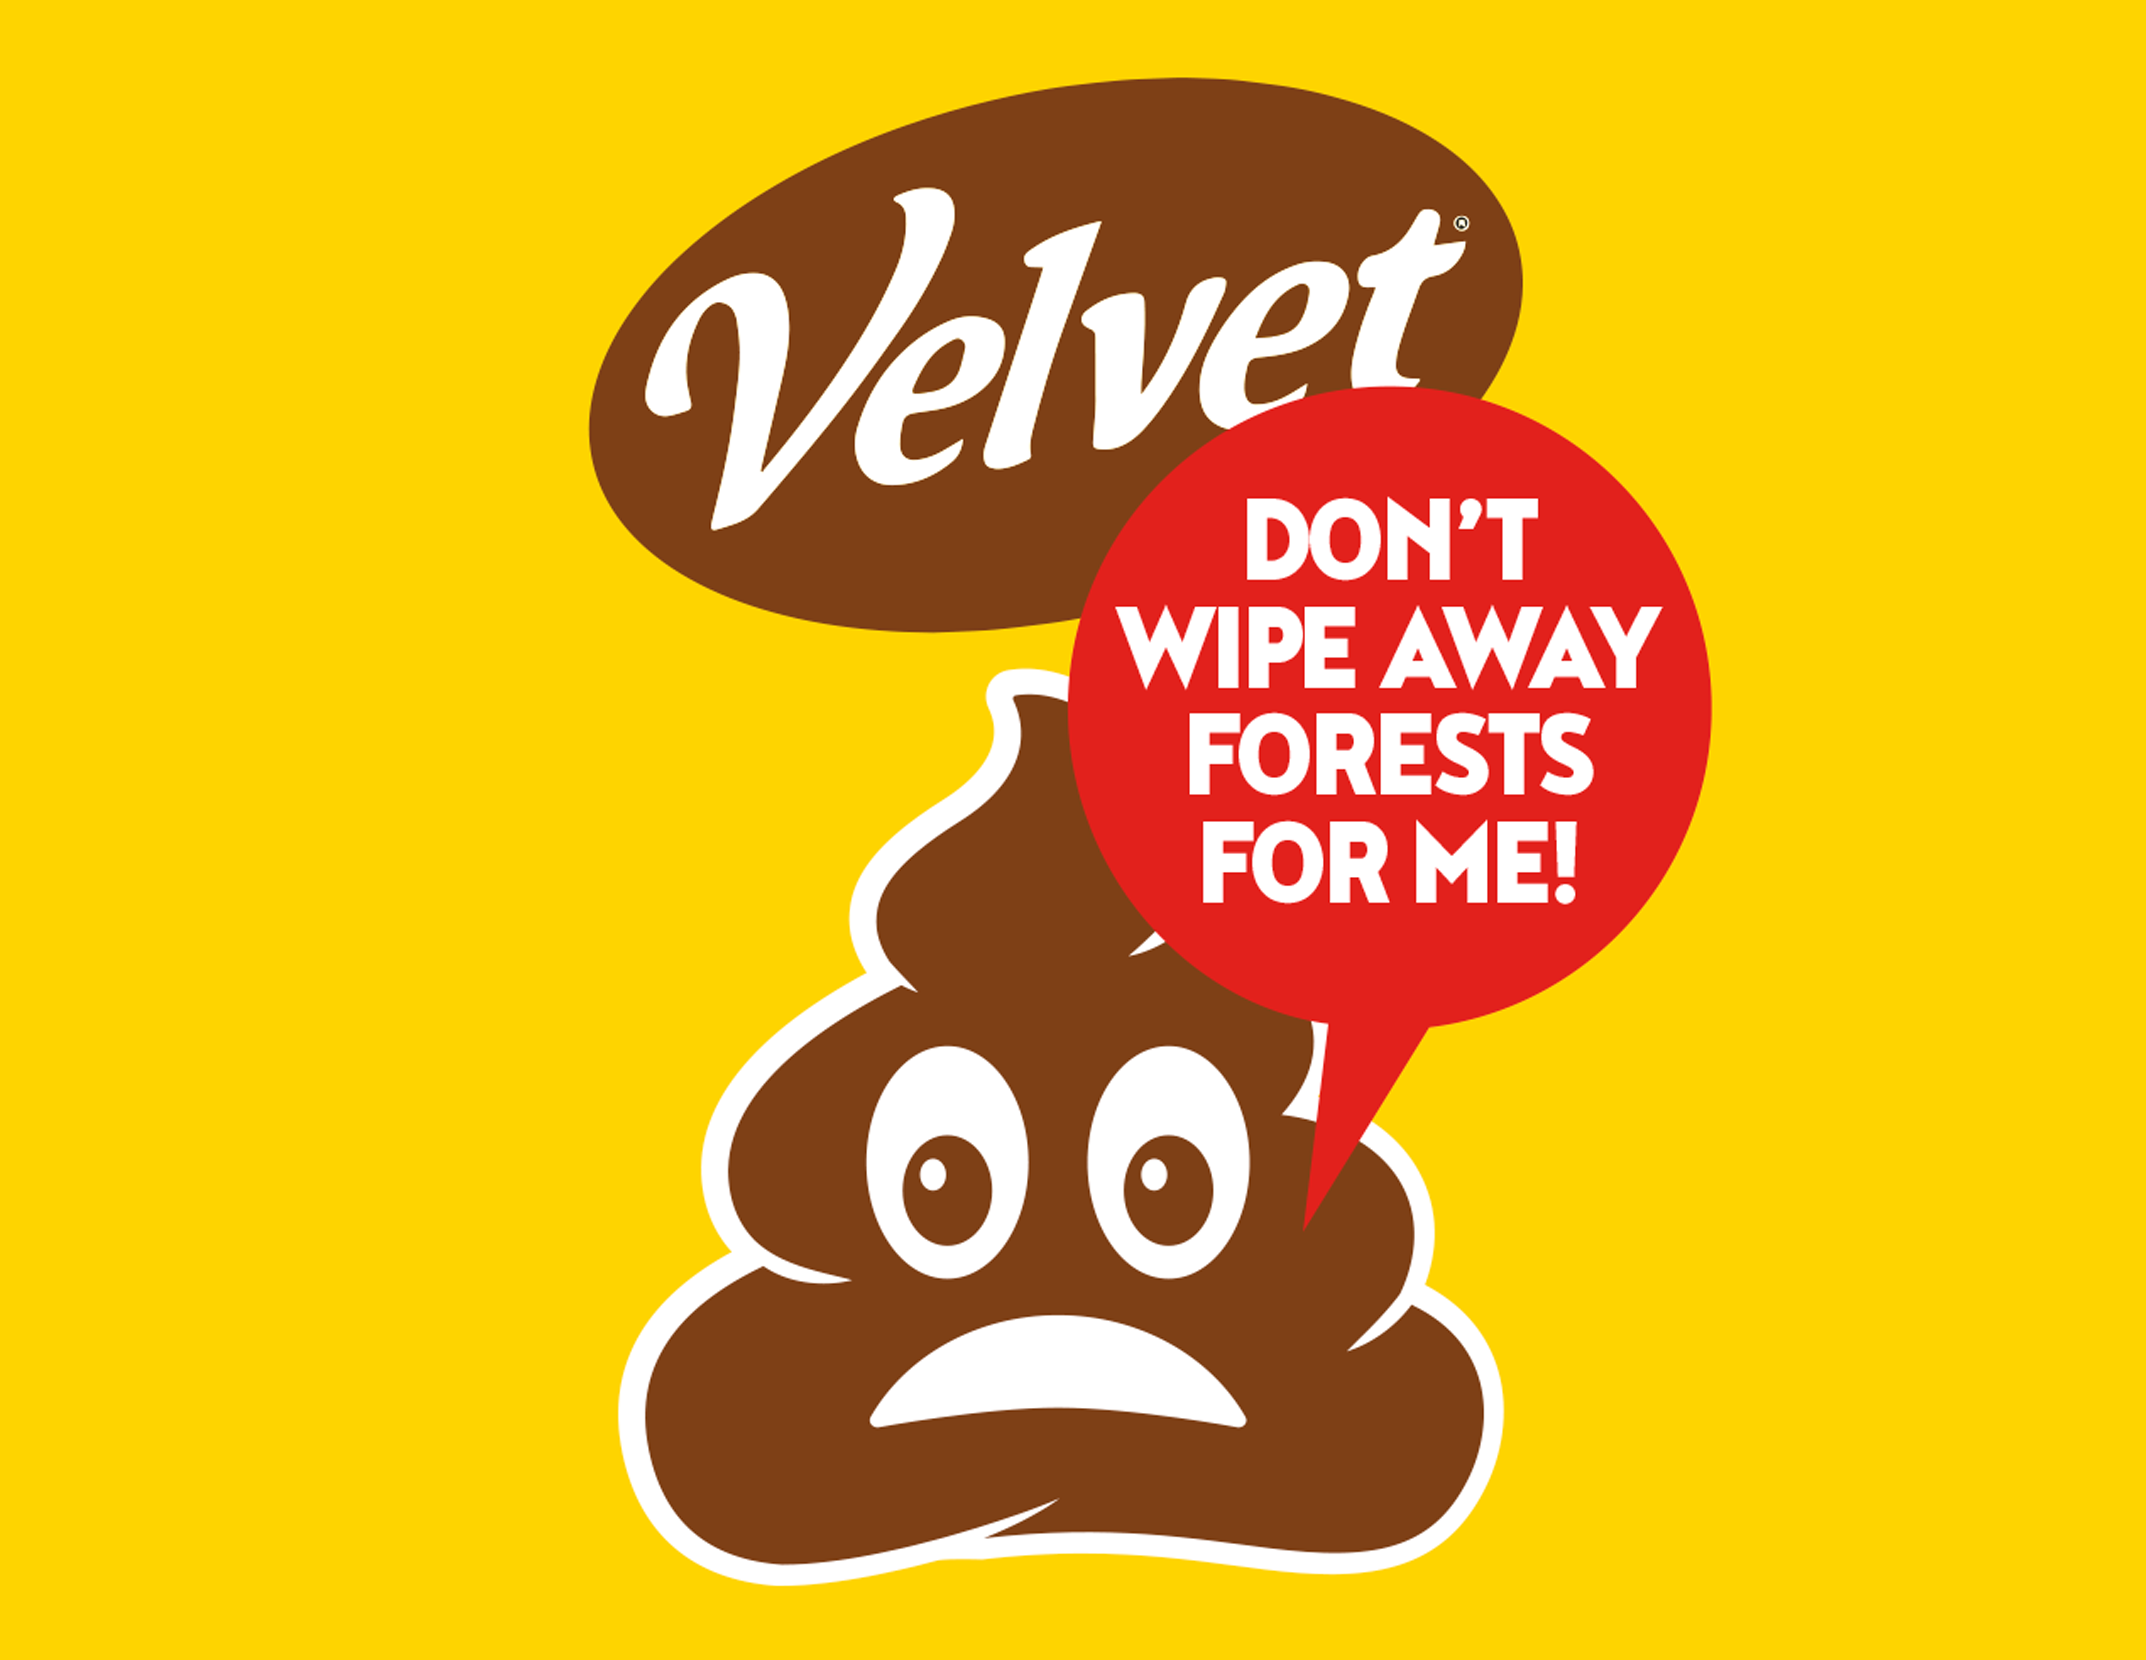 Velvet "Don't wipe away forests for me"